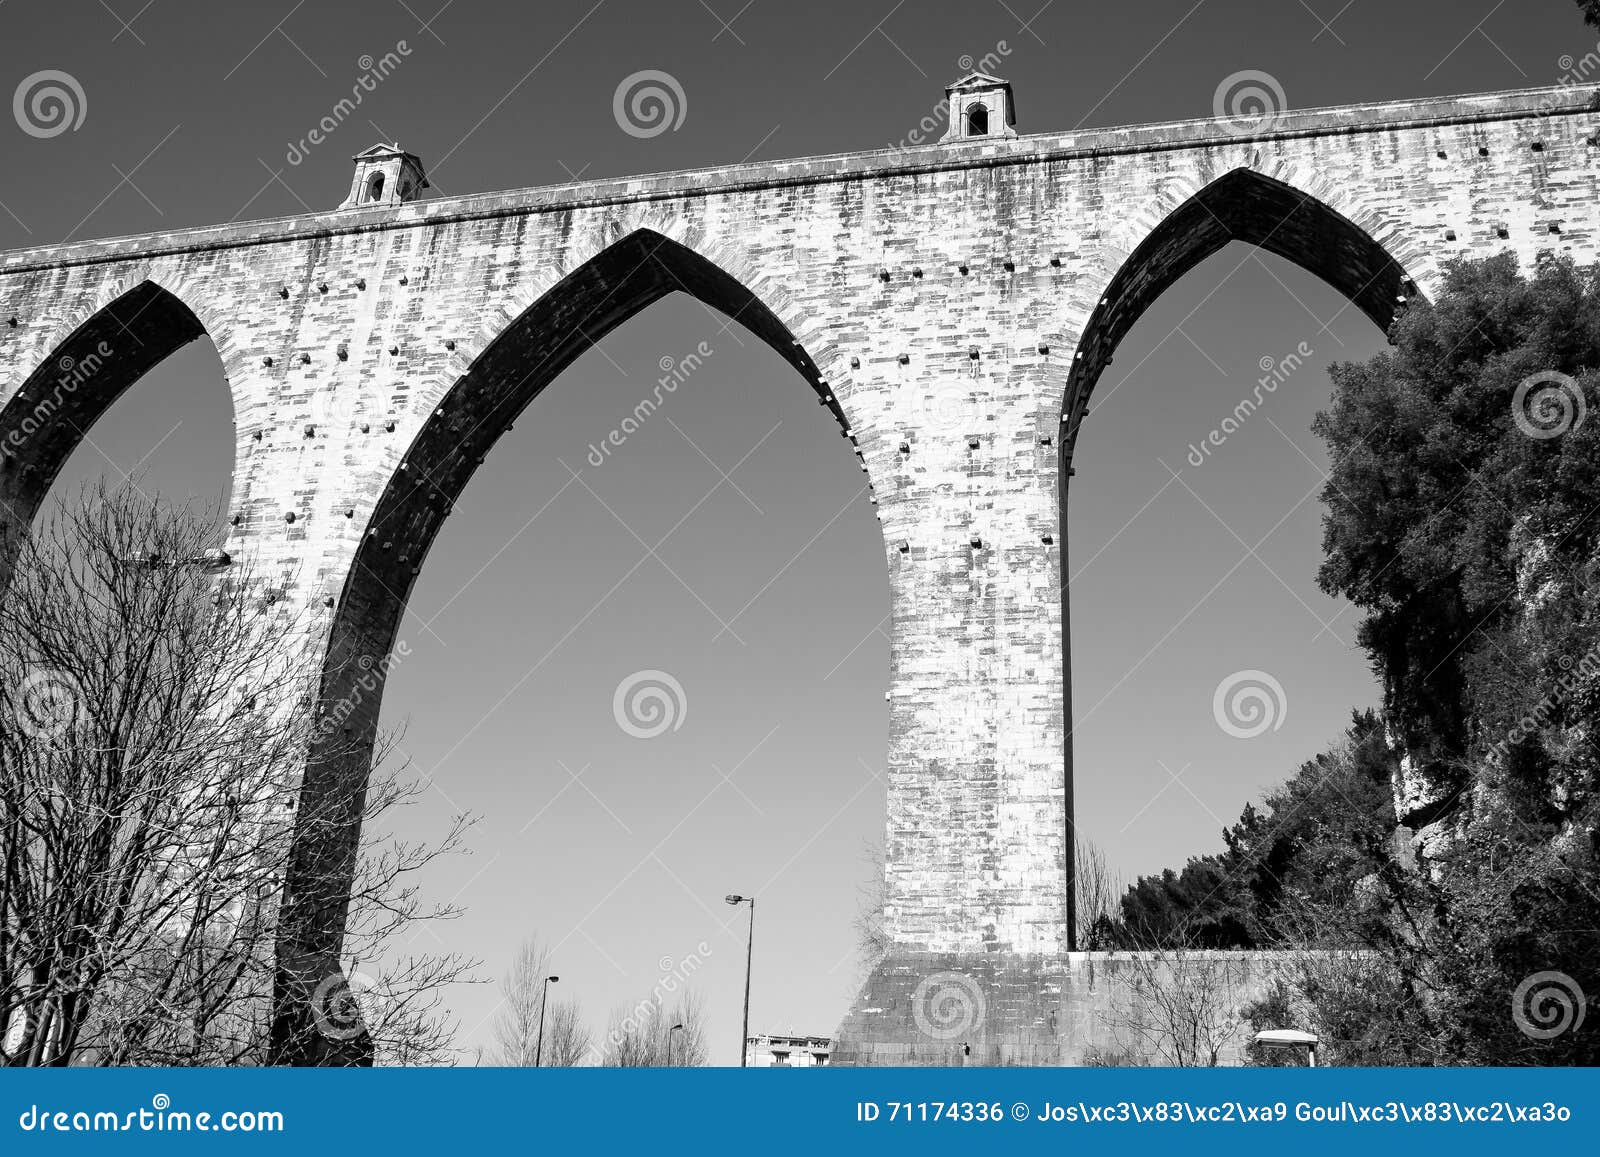 lisbon, portugal:the old ÃÂguas livres (free waters) aquaduct